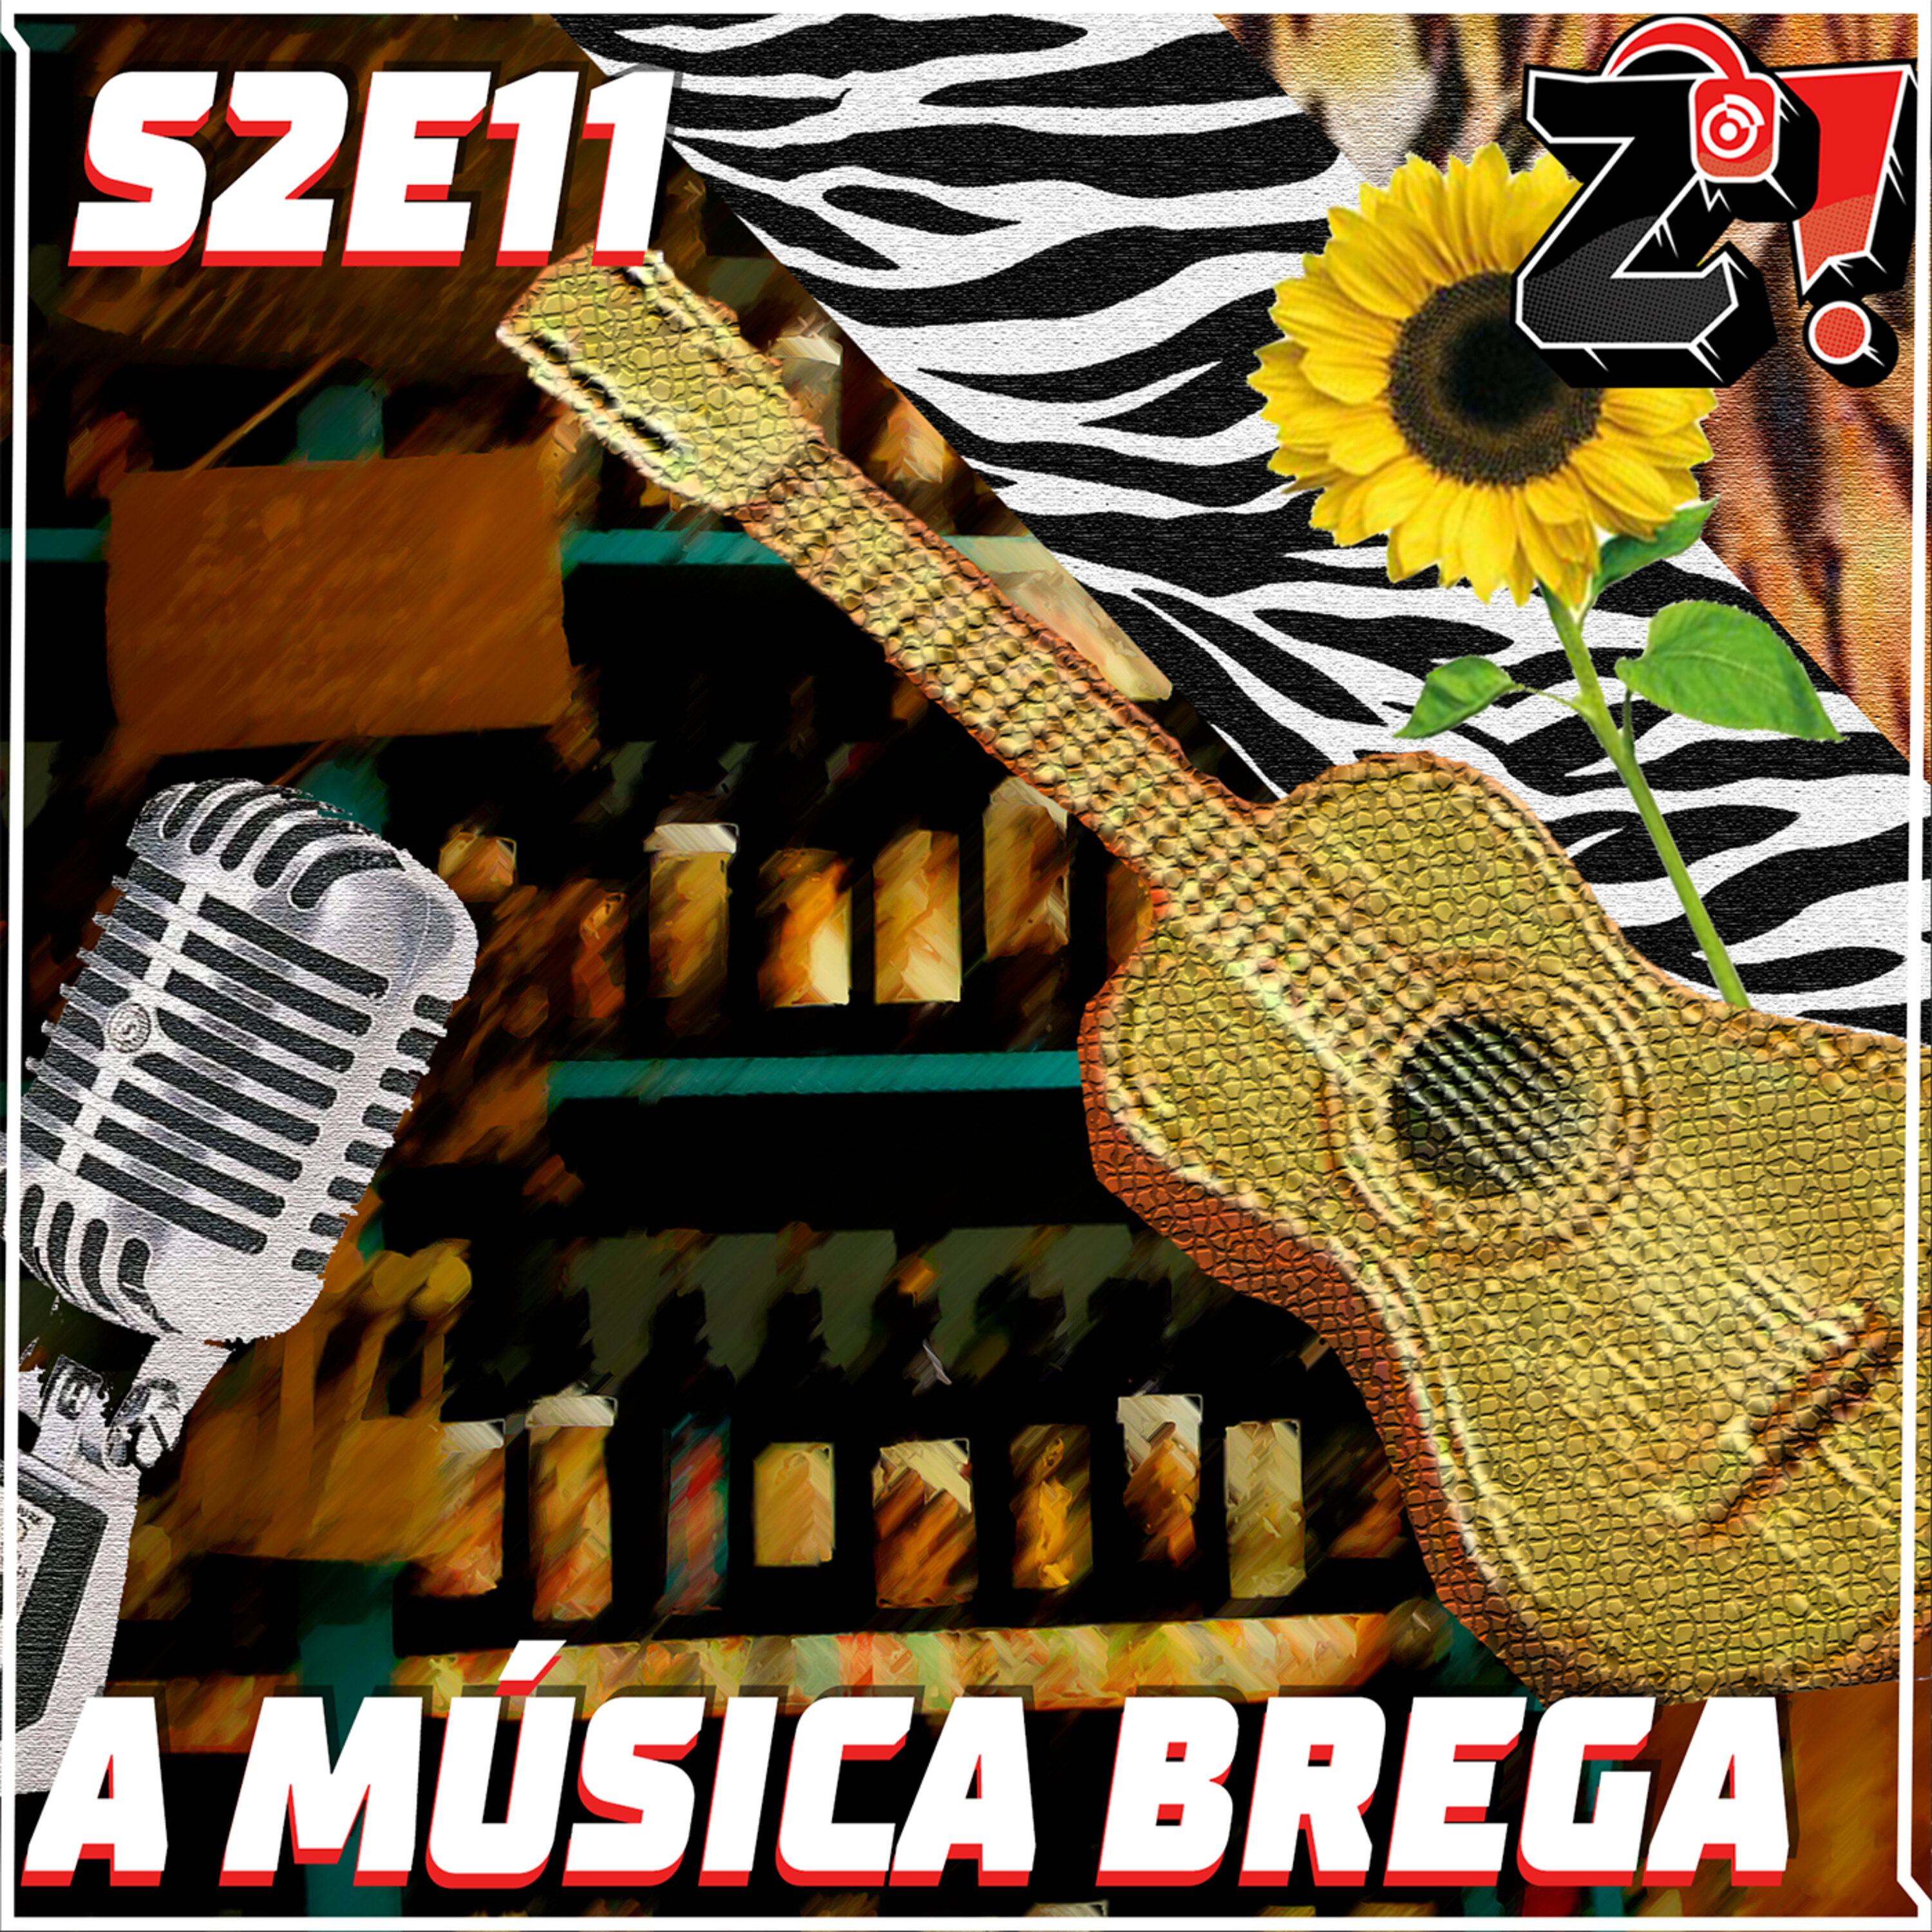 ZiCast S2E11 - Música Brega